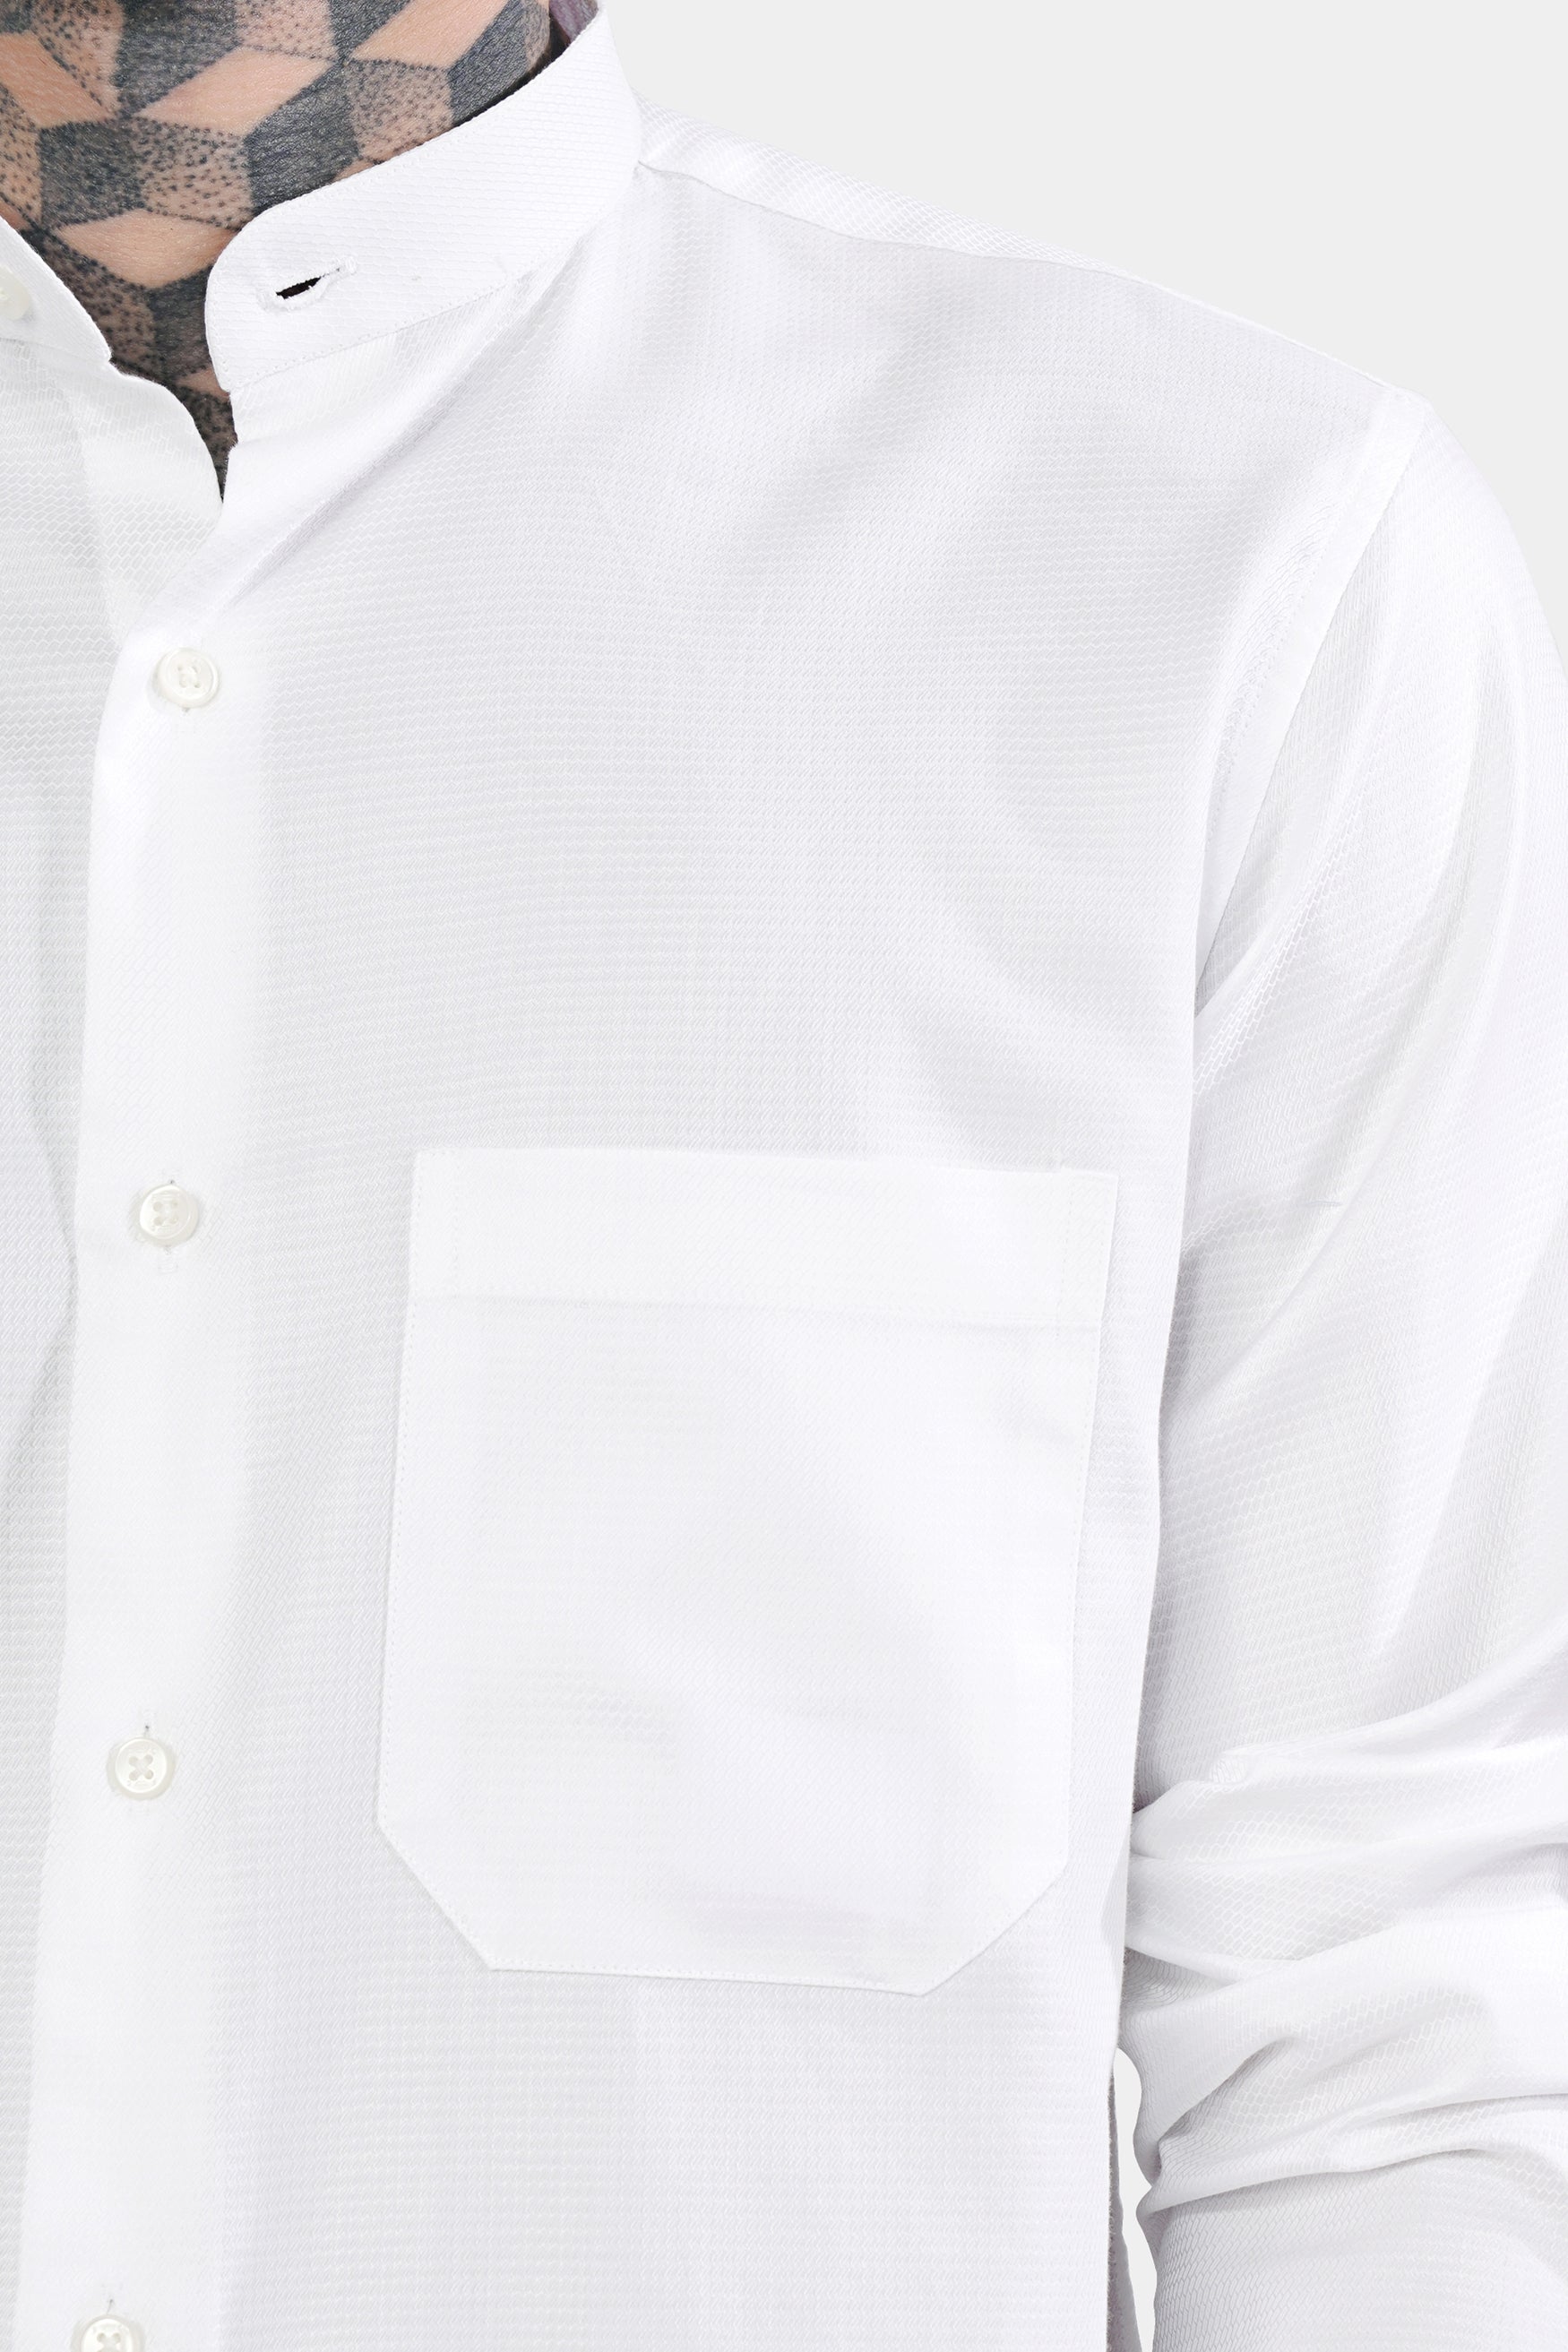 Bright White Dobby Textured Premium Giza Cotton Mandarin Shirt